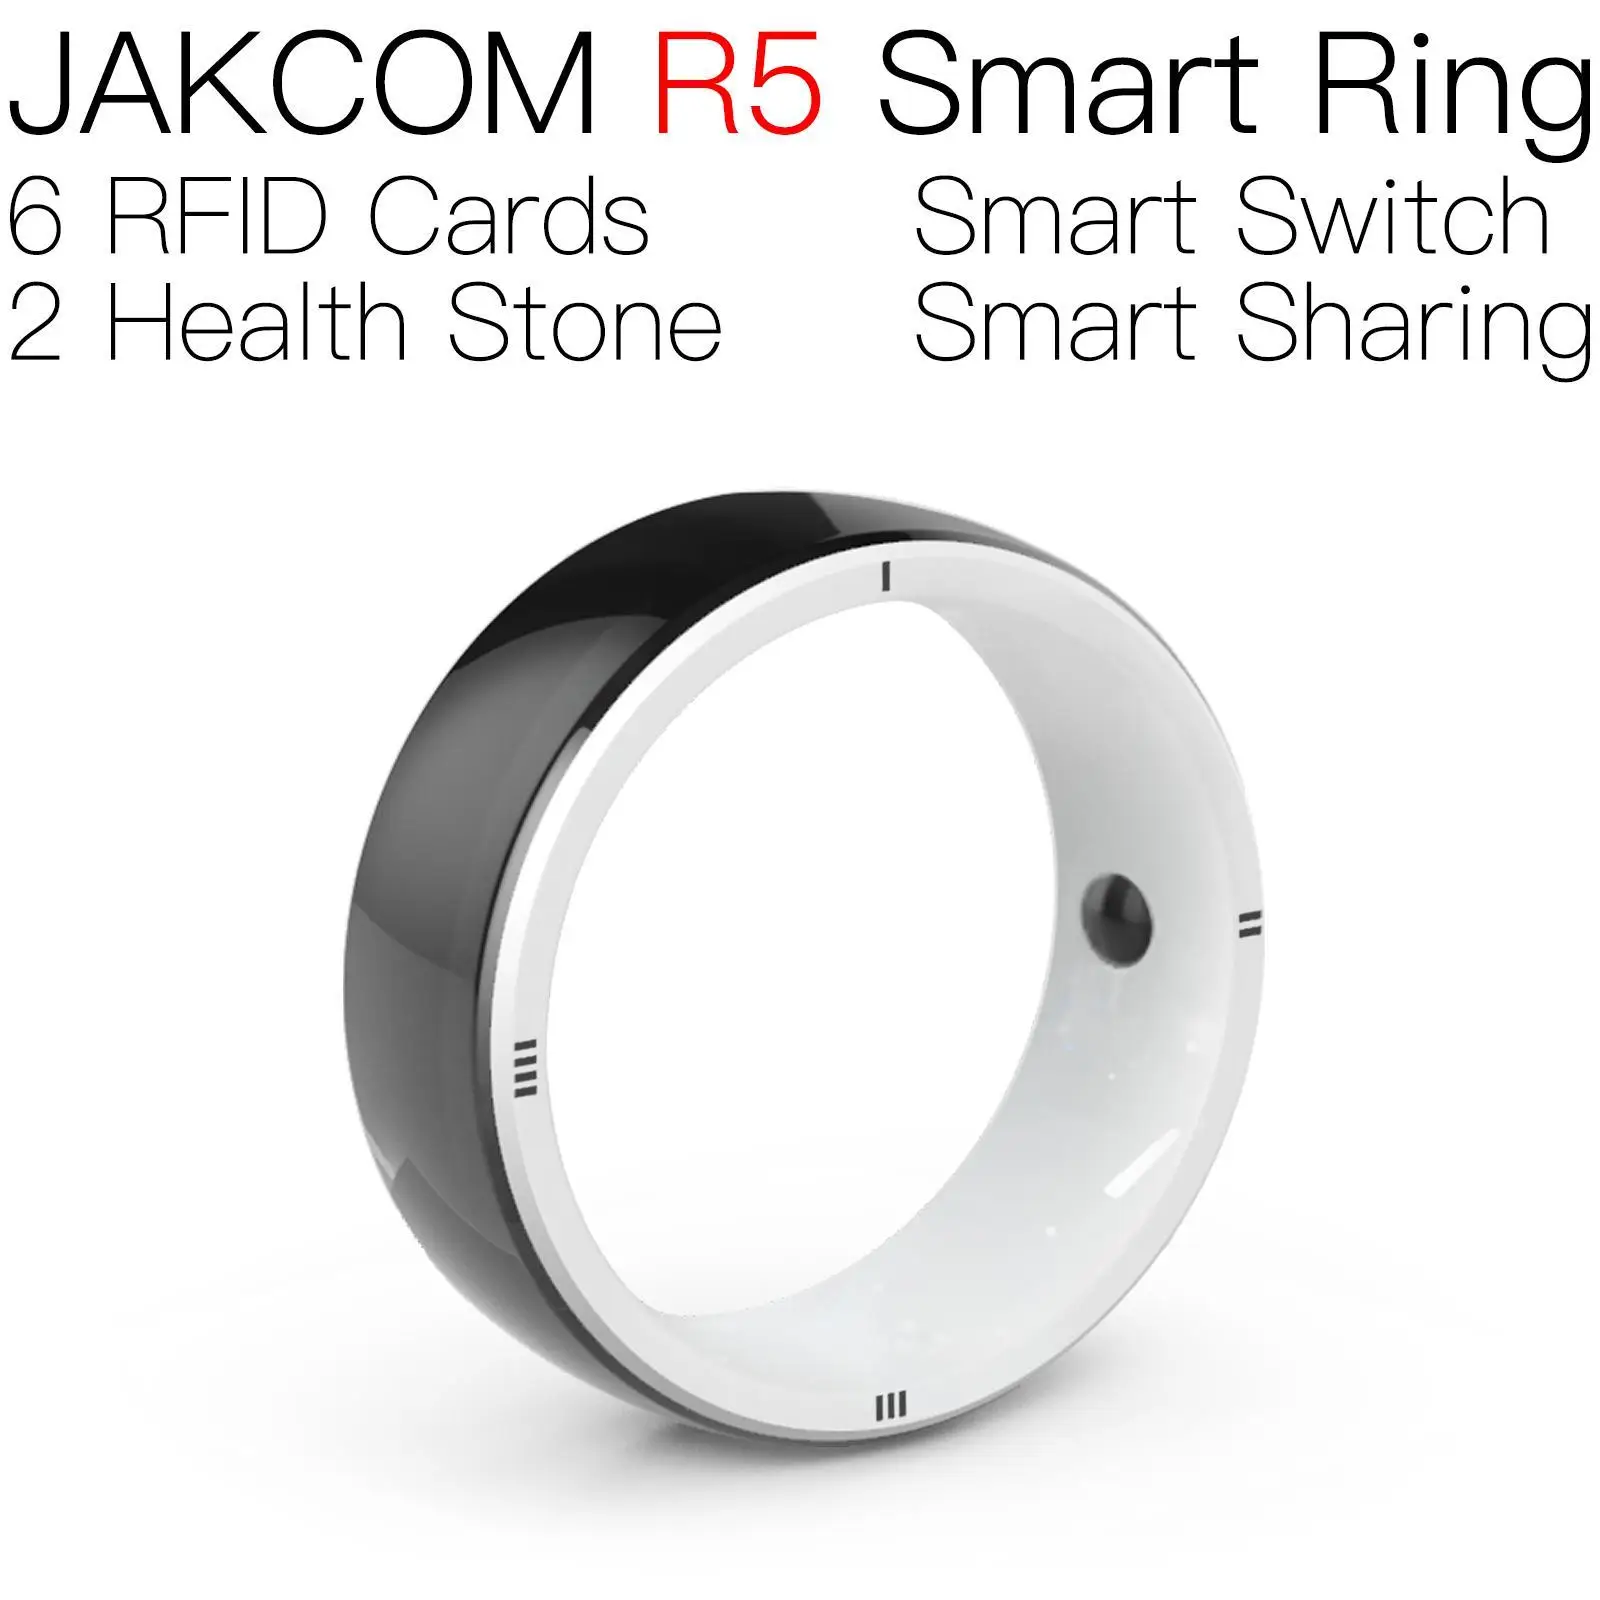 

JAKCOM R5 Smart Ring better than microchip animal rfid tag finder donkey key self protecting tags syringe 1ml laser